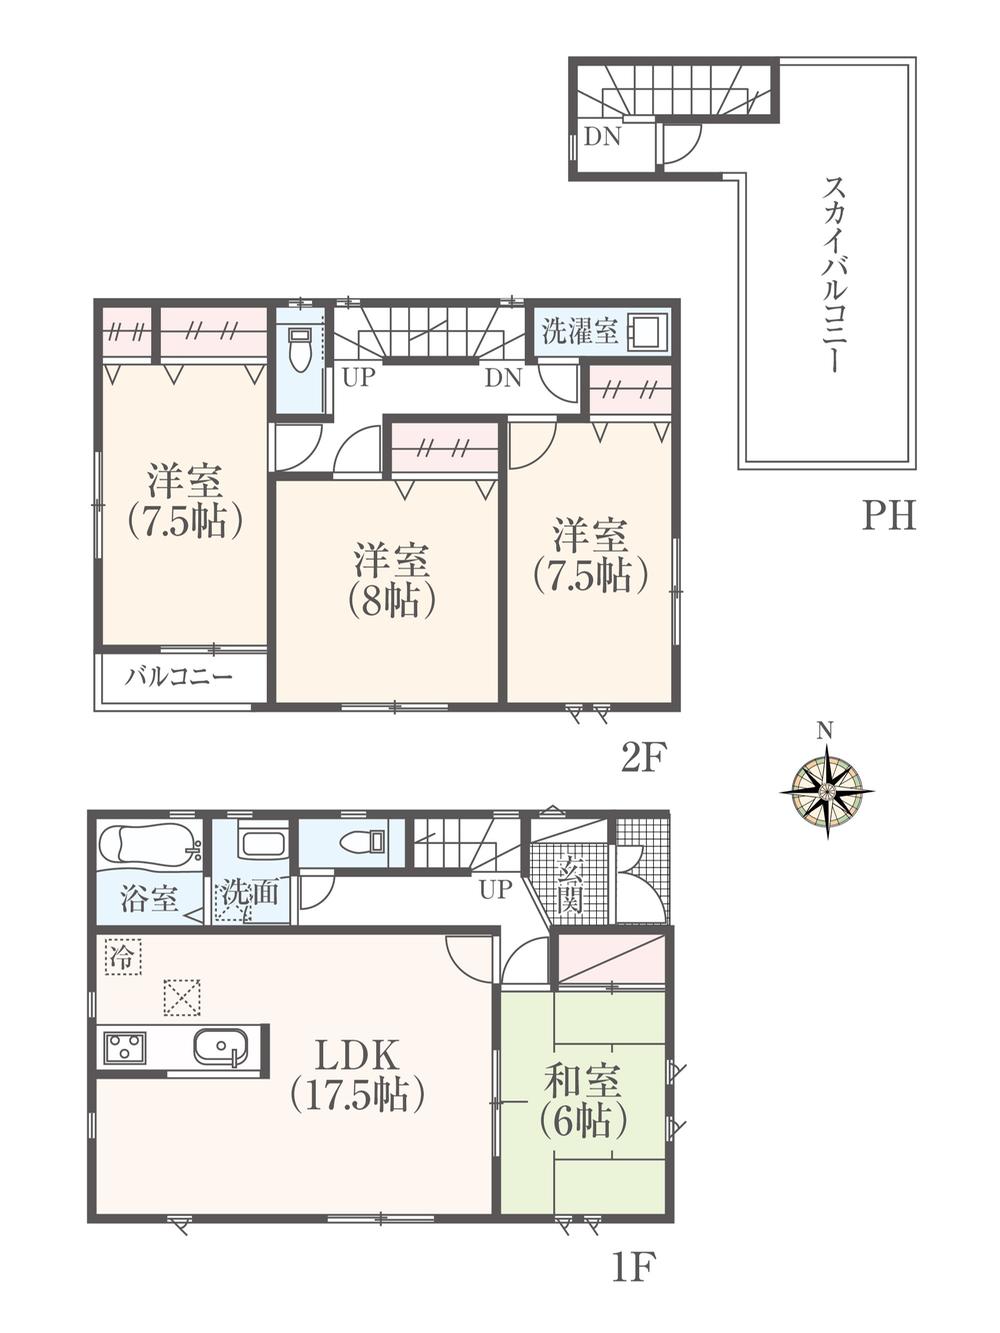 Building plan example (floor plan). Building plan example (E compartment) Building price 13 million yen, Building area 102.87 sq m